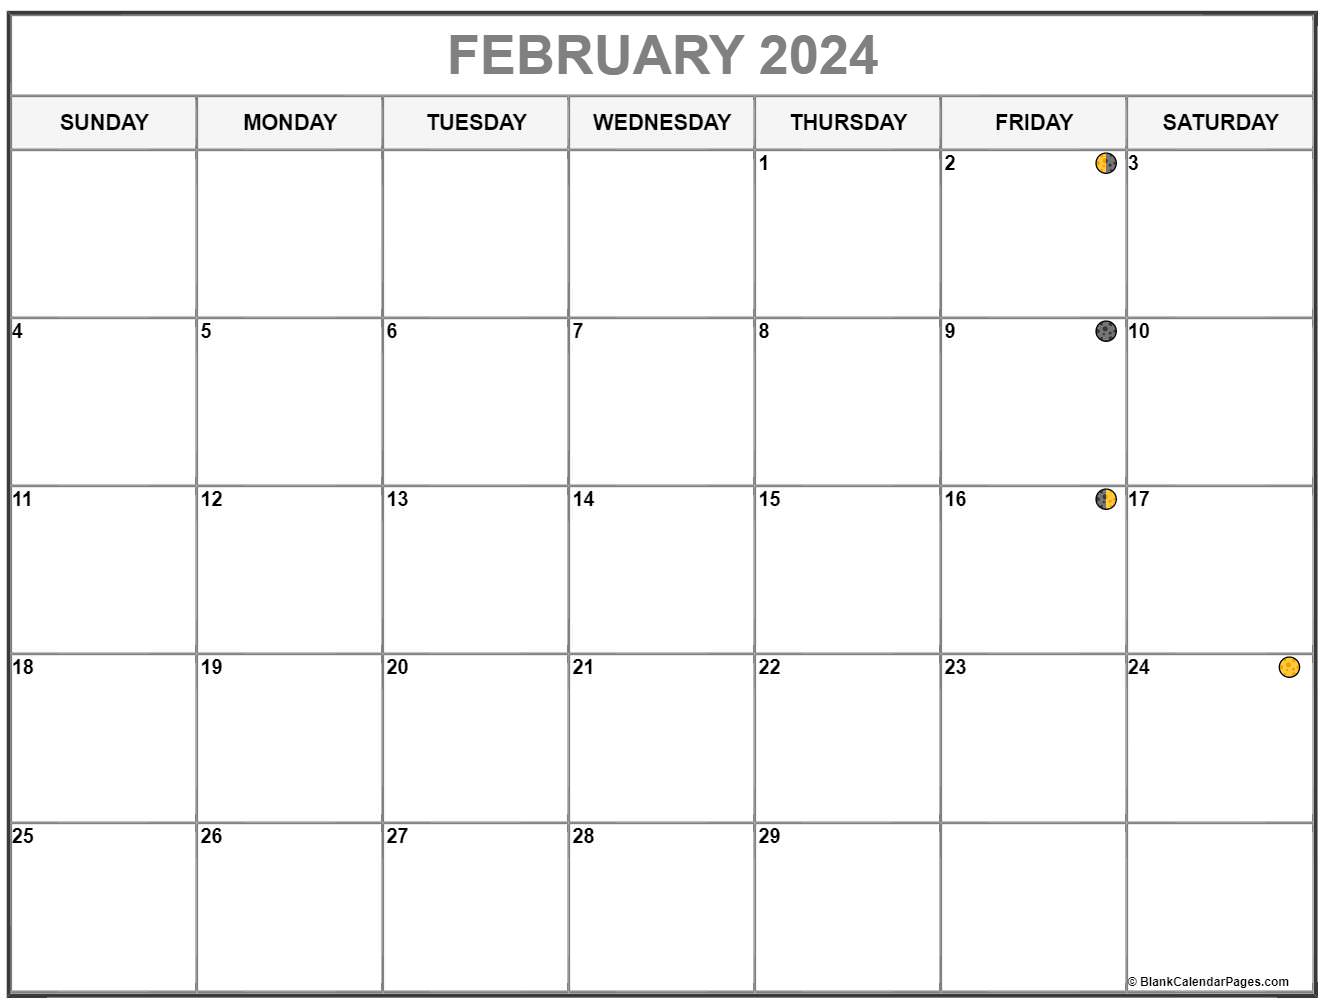 February 2021 Lunar Calendar | Moon Phase Calendar